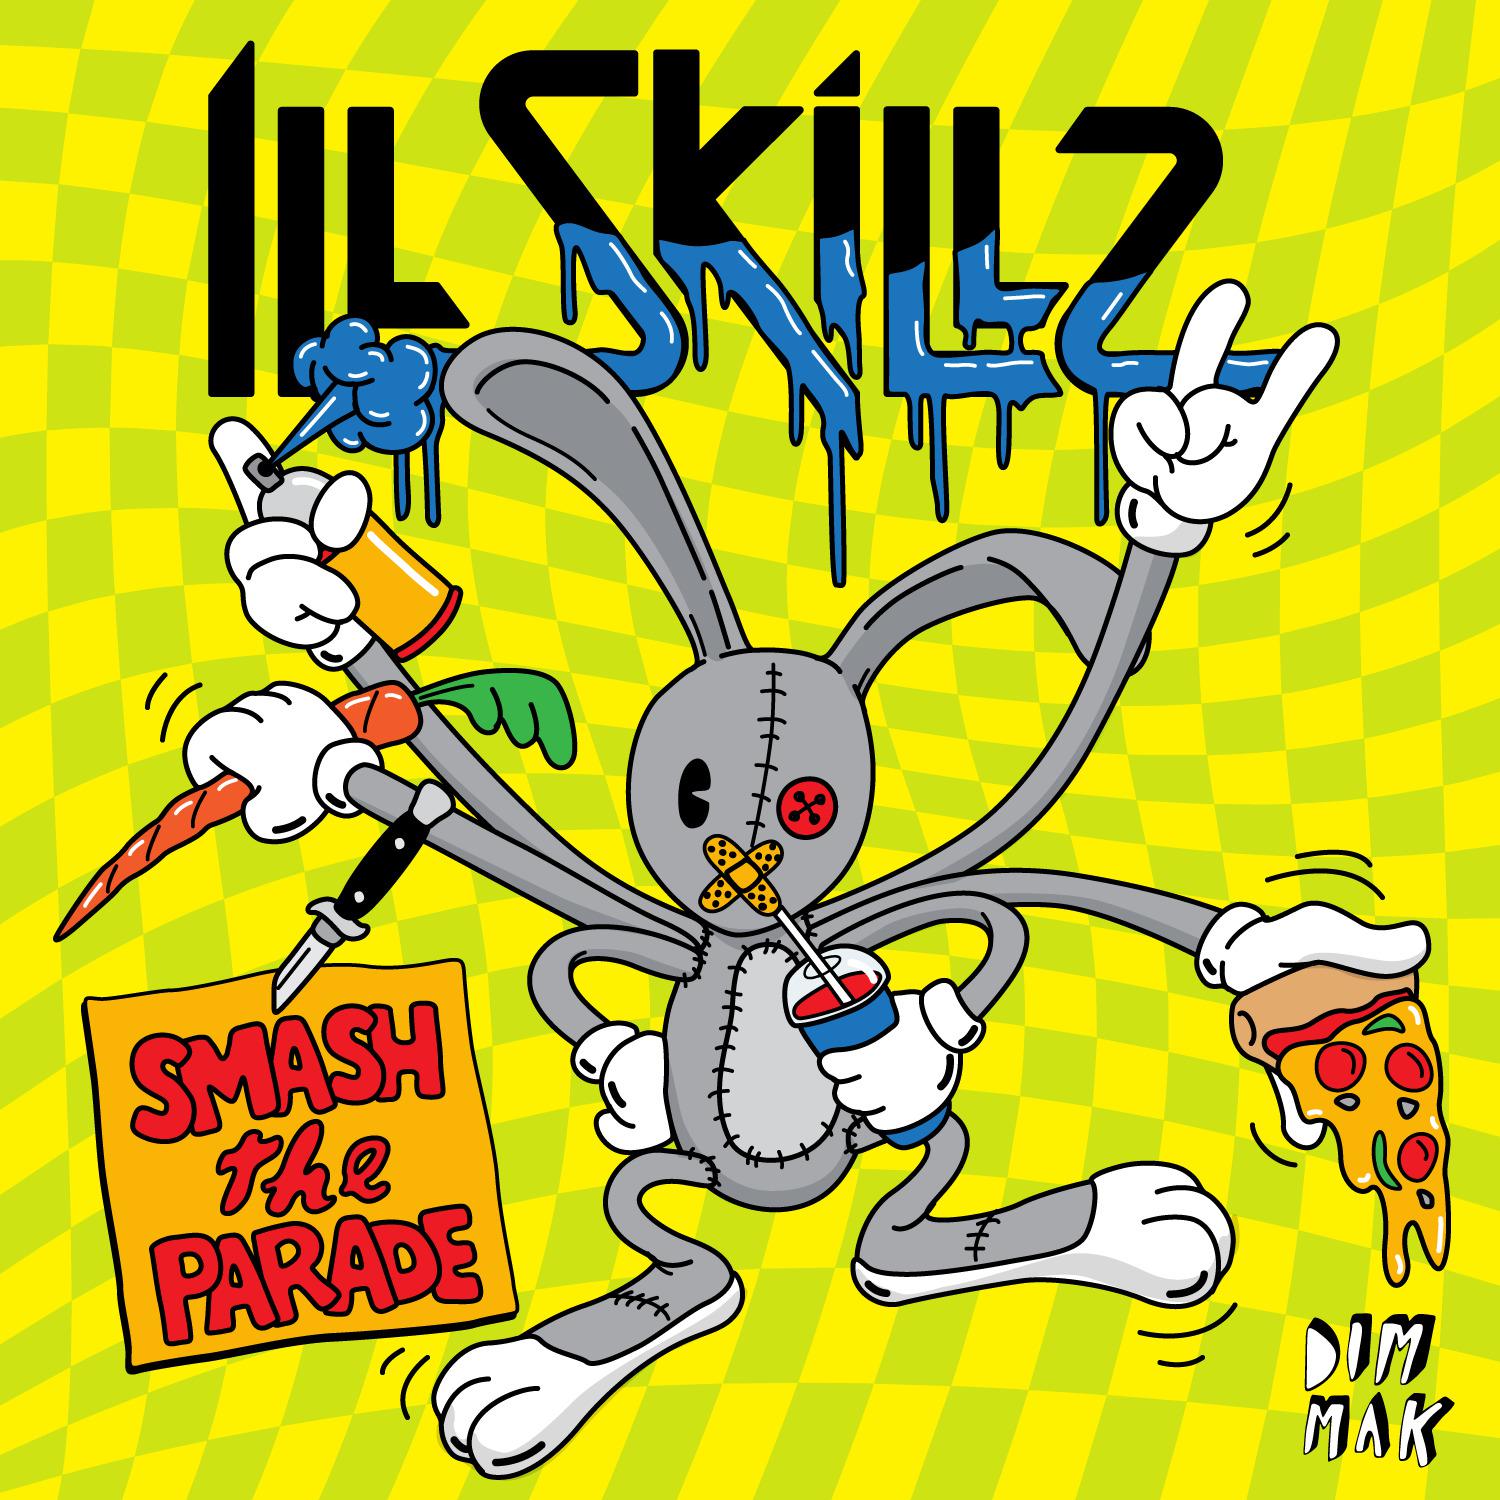 Illskillz - Never Step Back (feat. Nina)